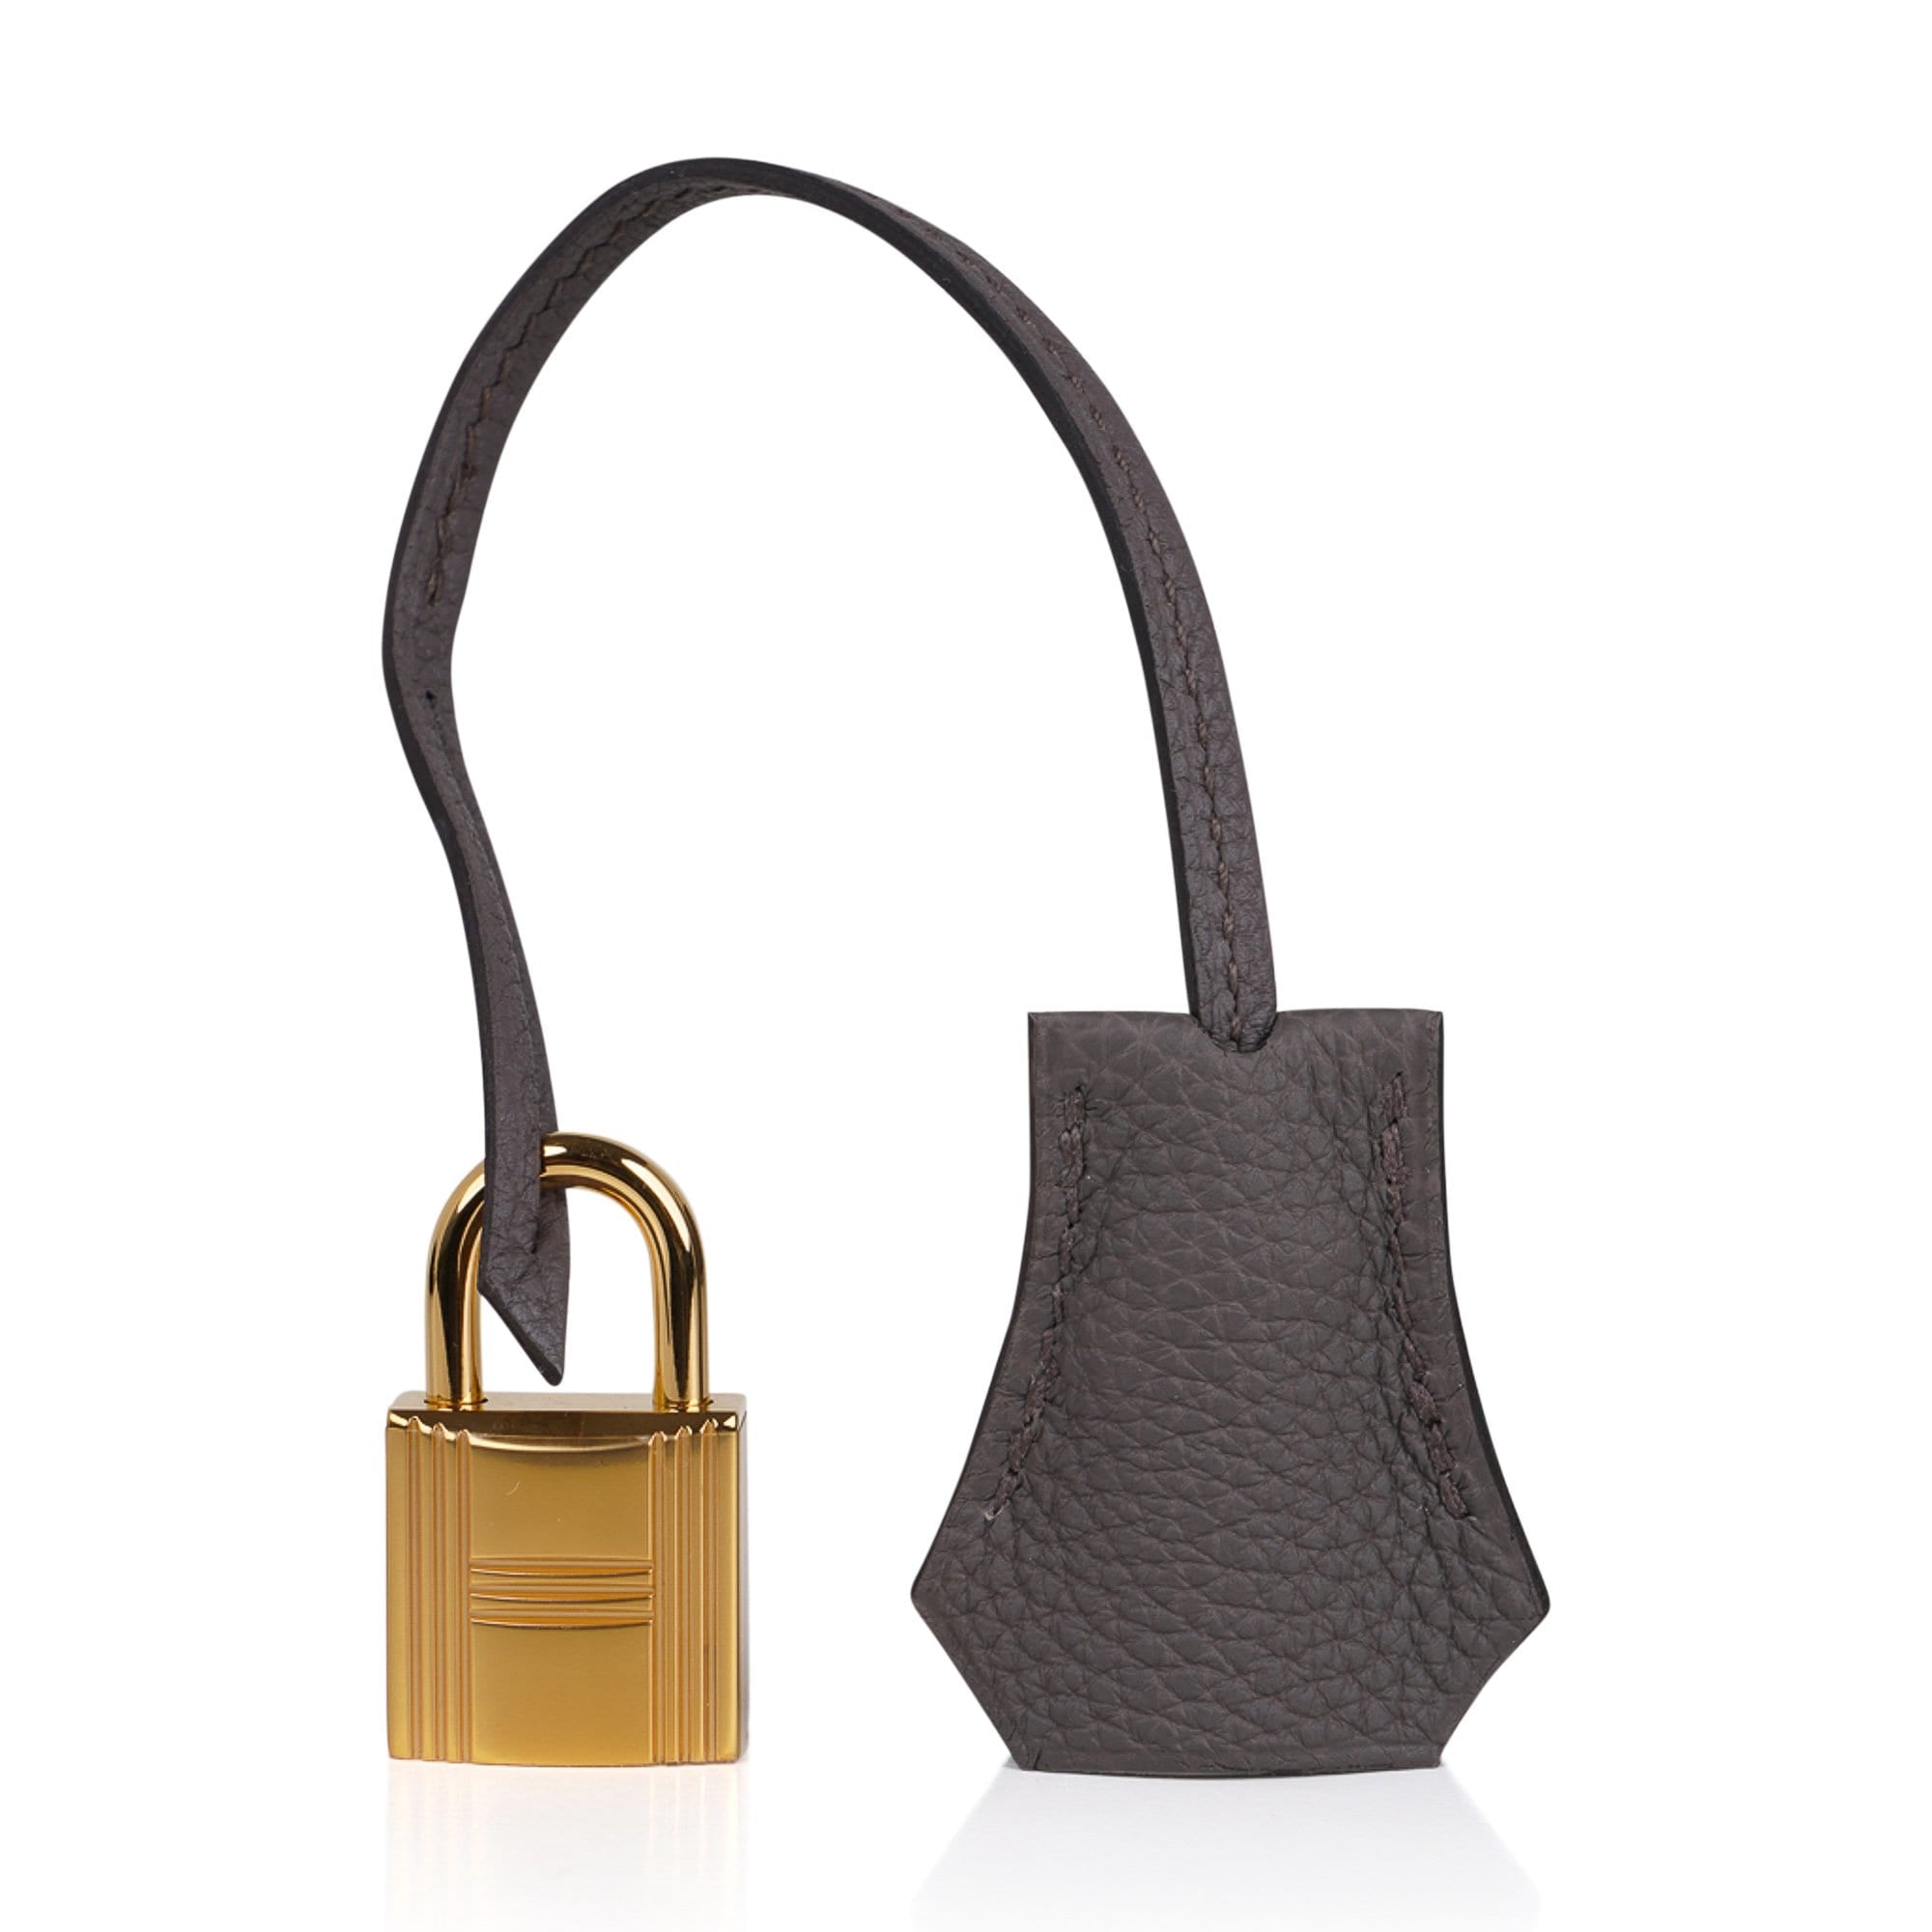 Hermès Birkin 25 Togo Leather Handbag